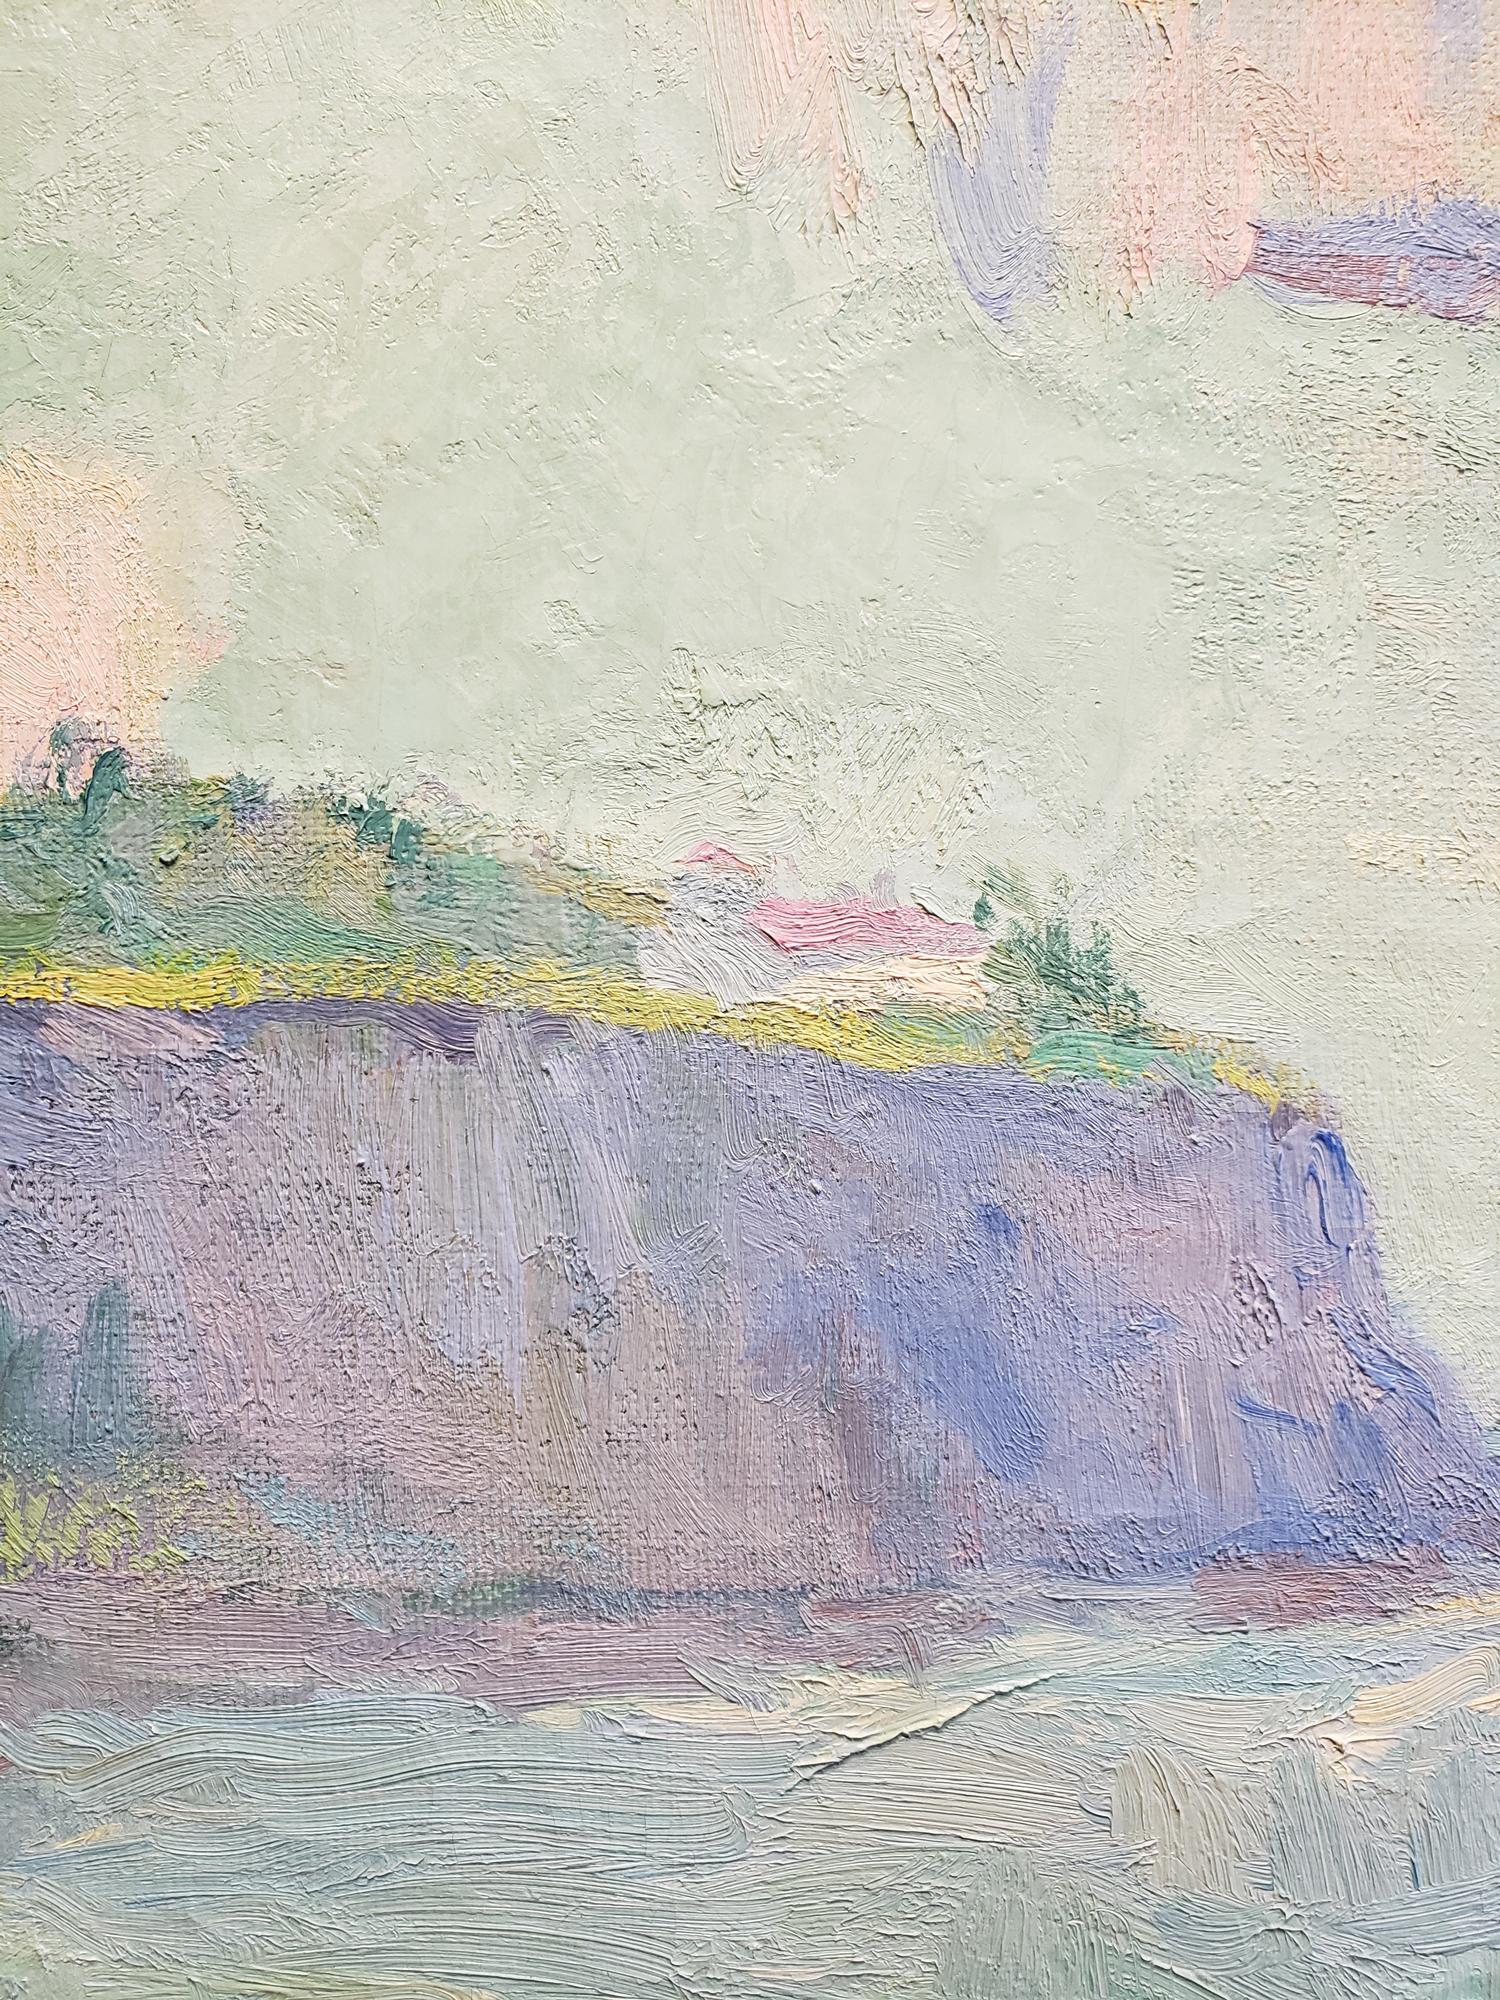 Malaga Cove - Impressionist Painting by Daniel Warren Pinkham